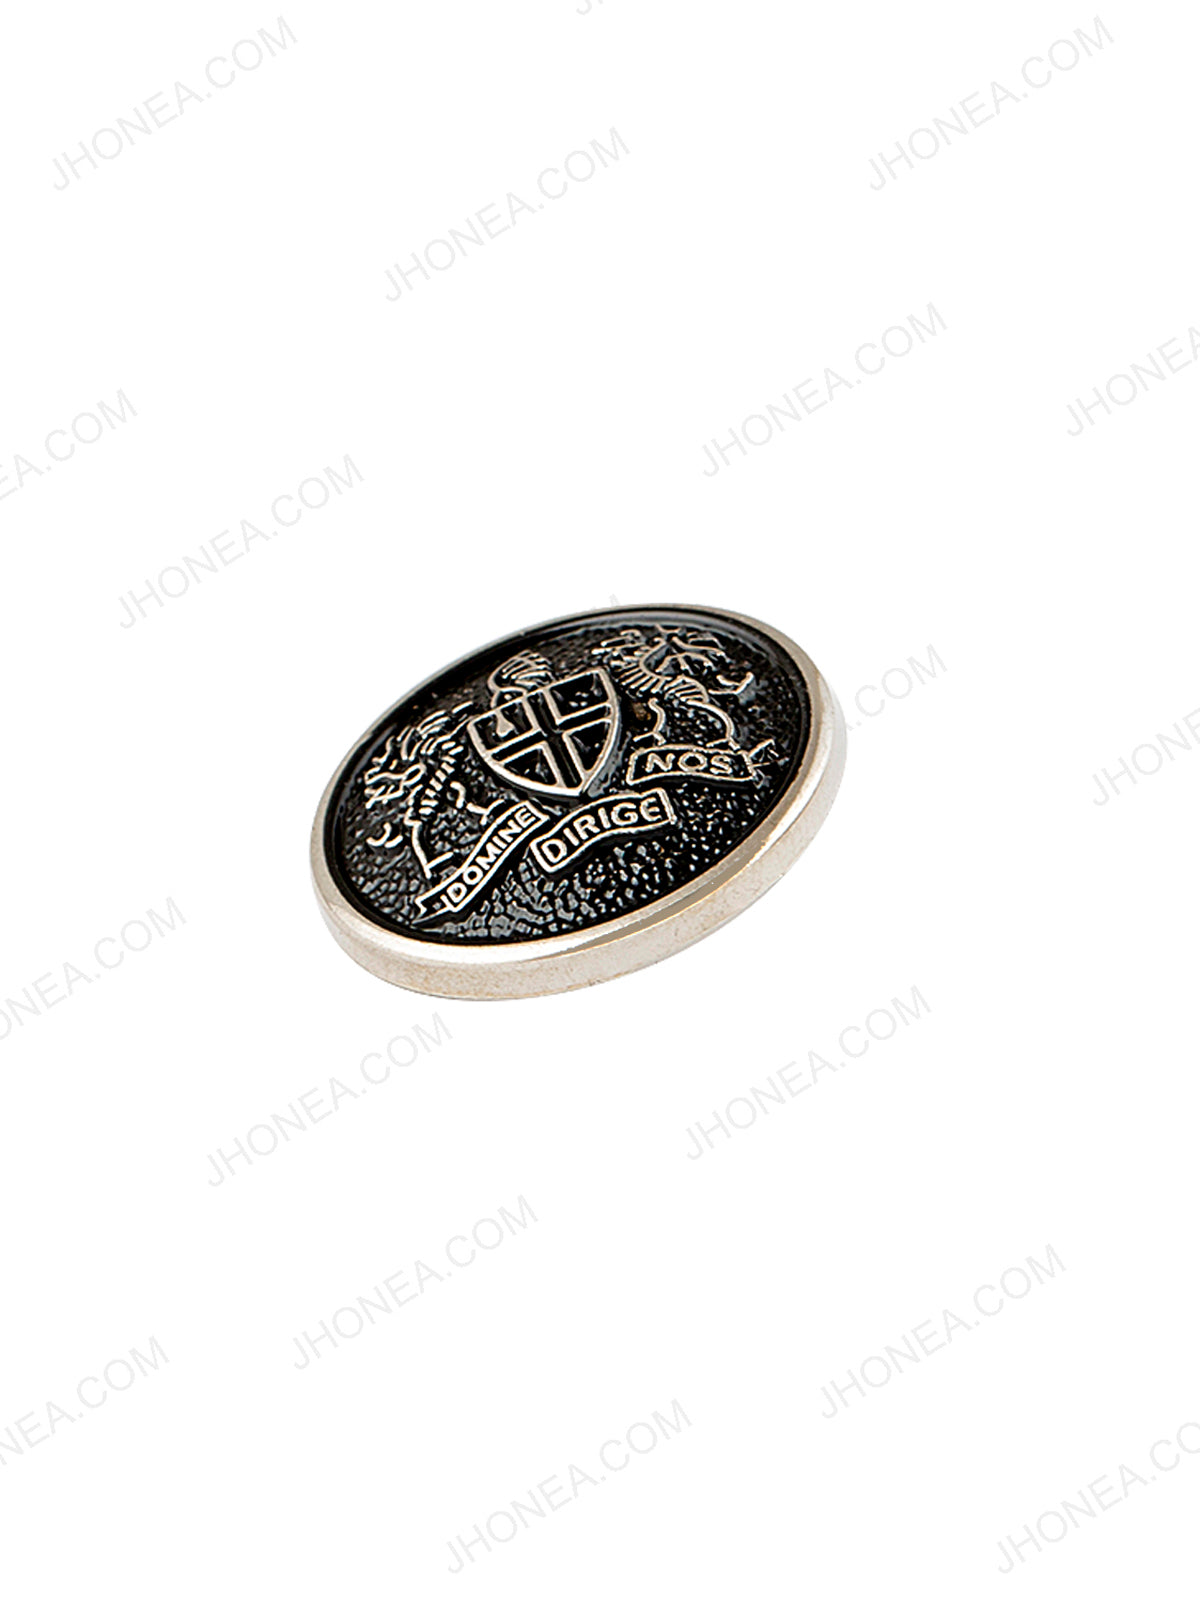 Black & Silver Designer Round Engraved Coat Button